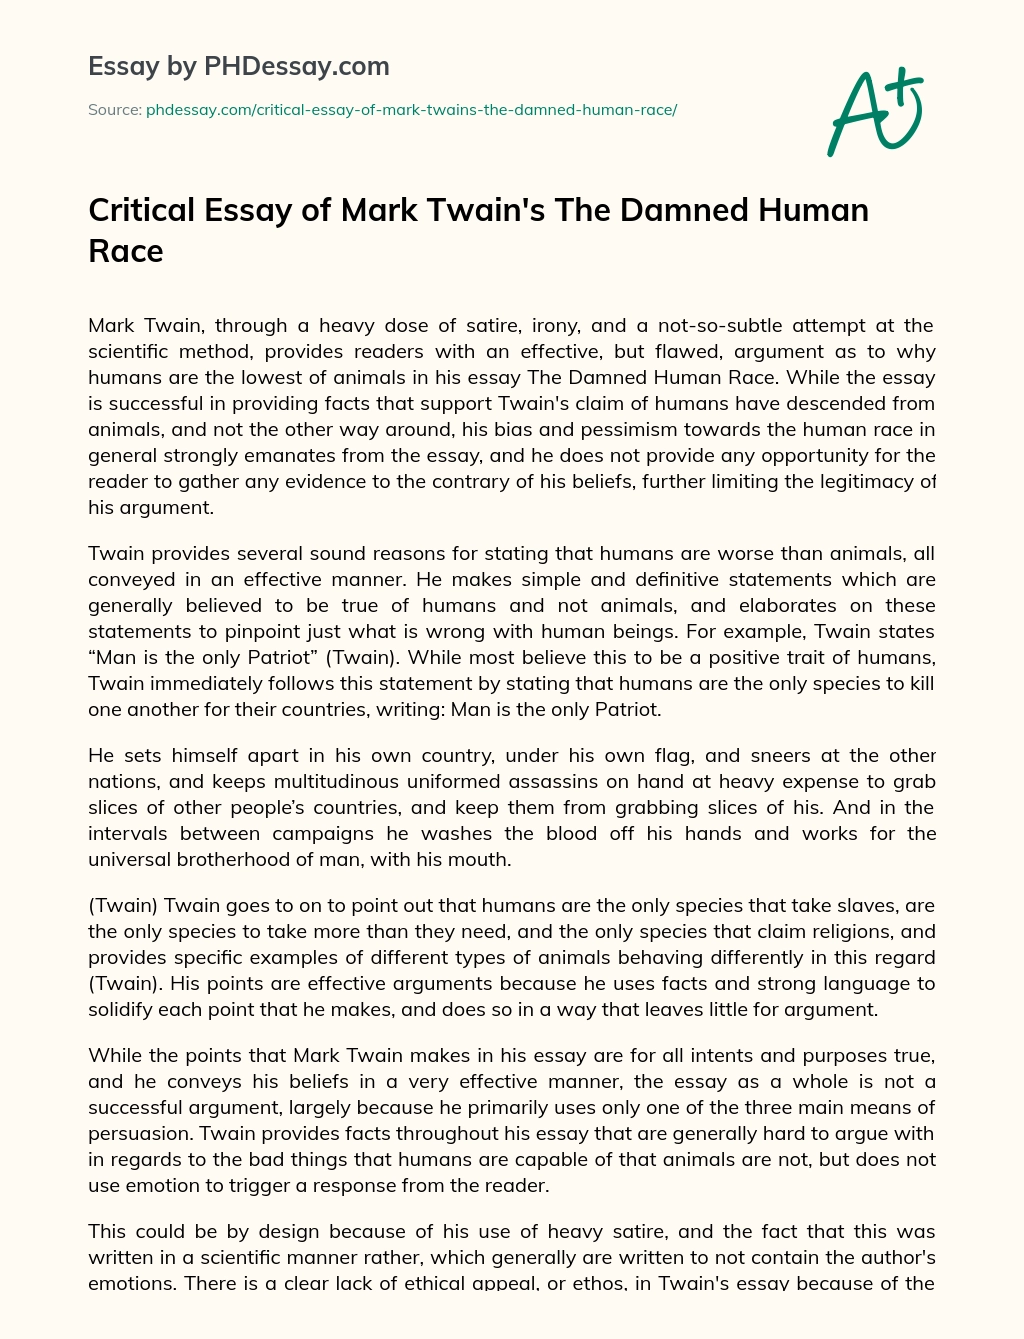 Critical Essay of Mark Twain’s The Damned Human Race essay